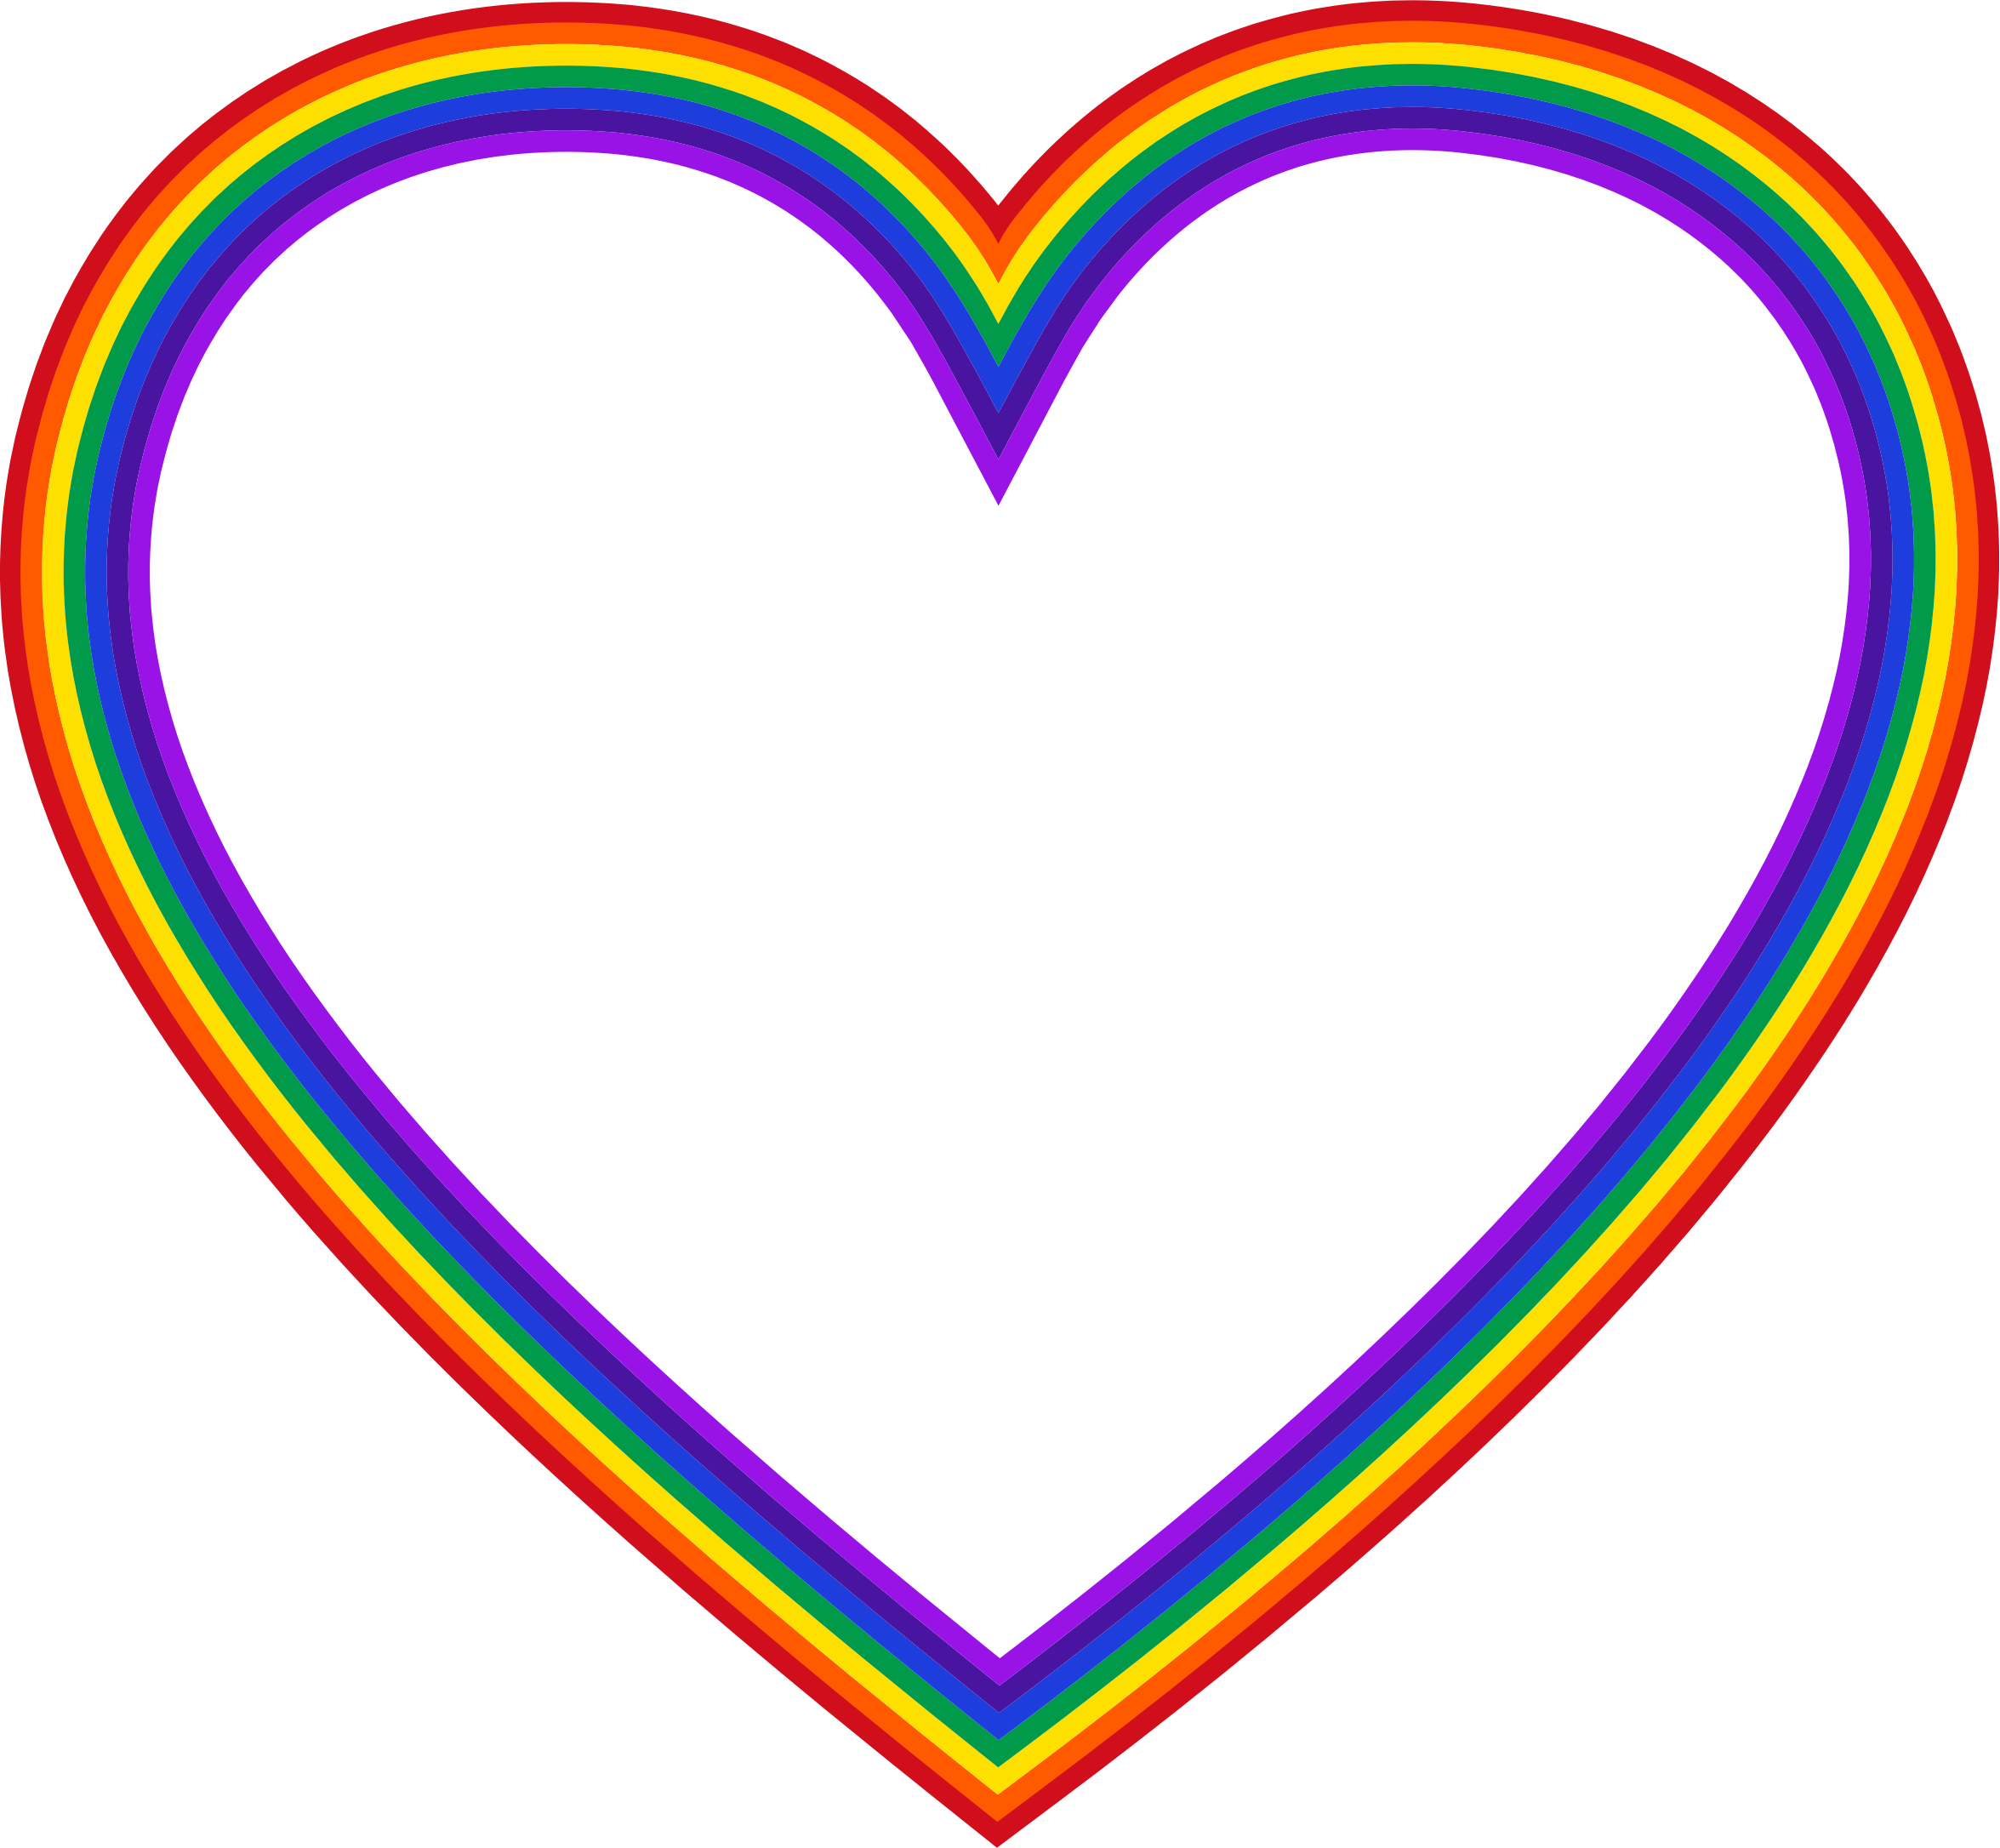 Rainbow Heart 5 - Rainbow Heart Transparent Background (2351x2172)